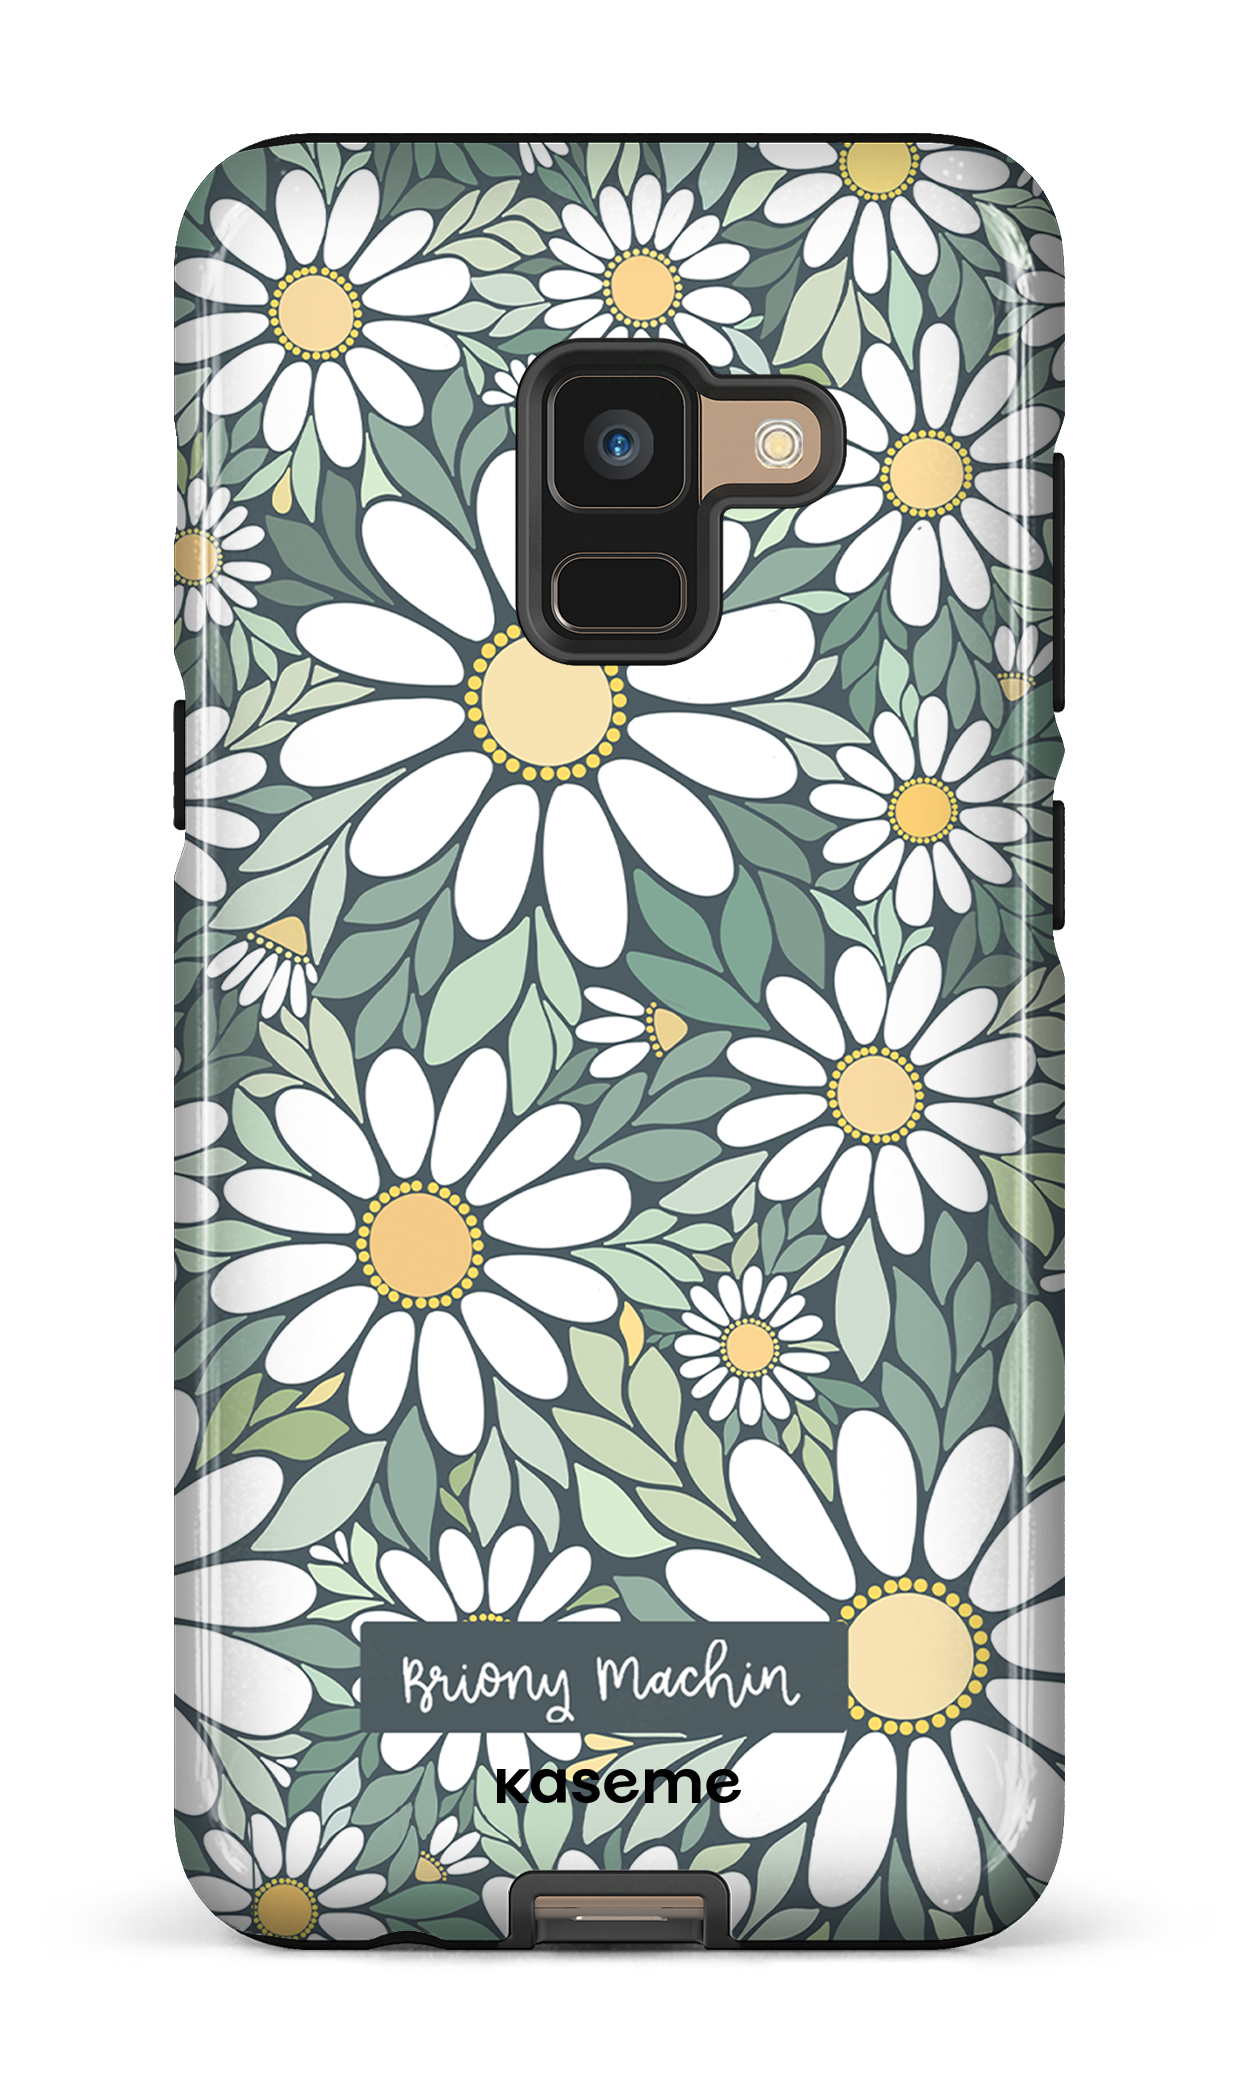 Daisy Blooms by Briony Machin - Galaxy A8